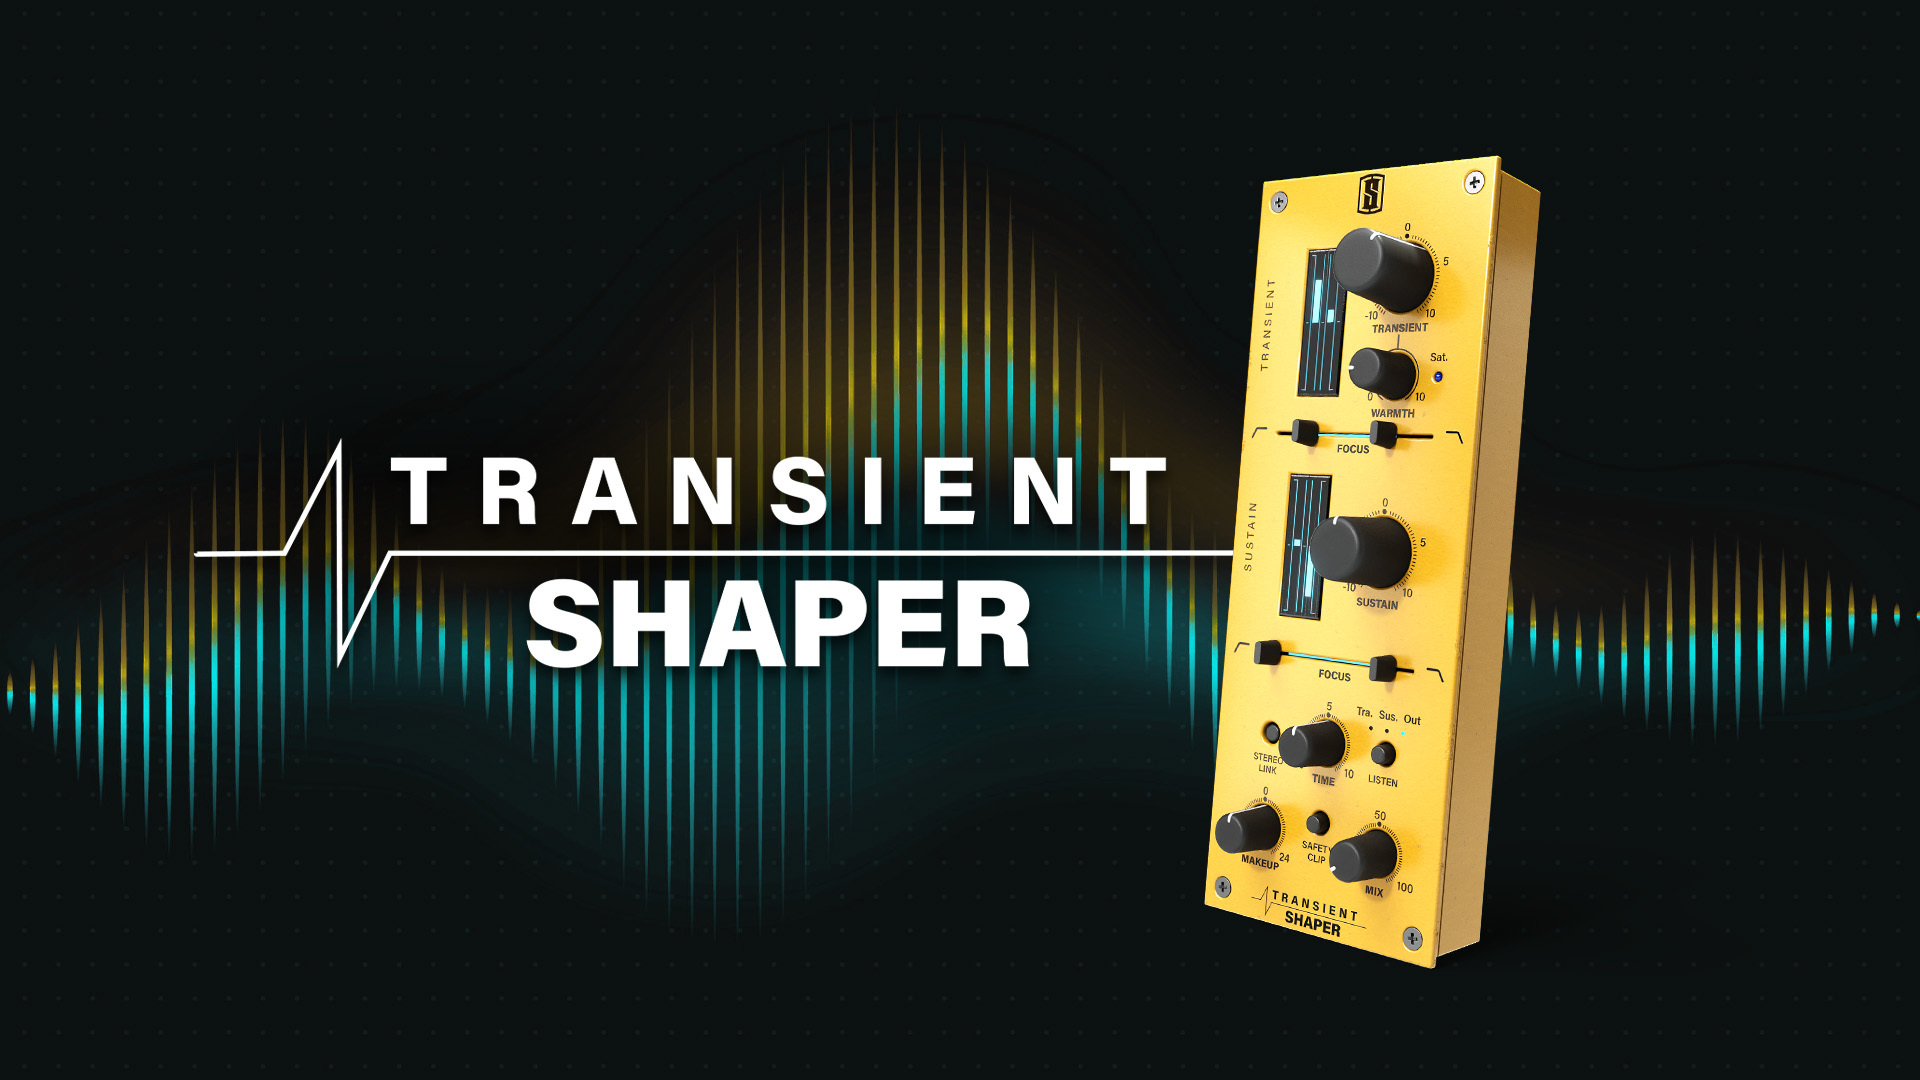 Meet Transient Shaper!